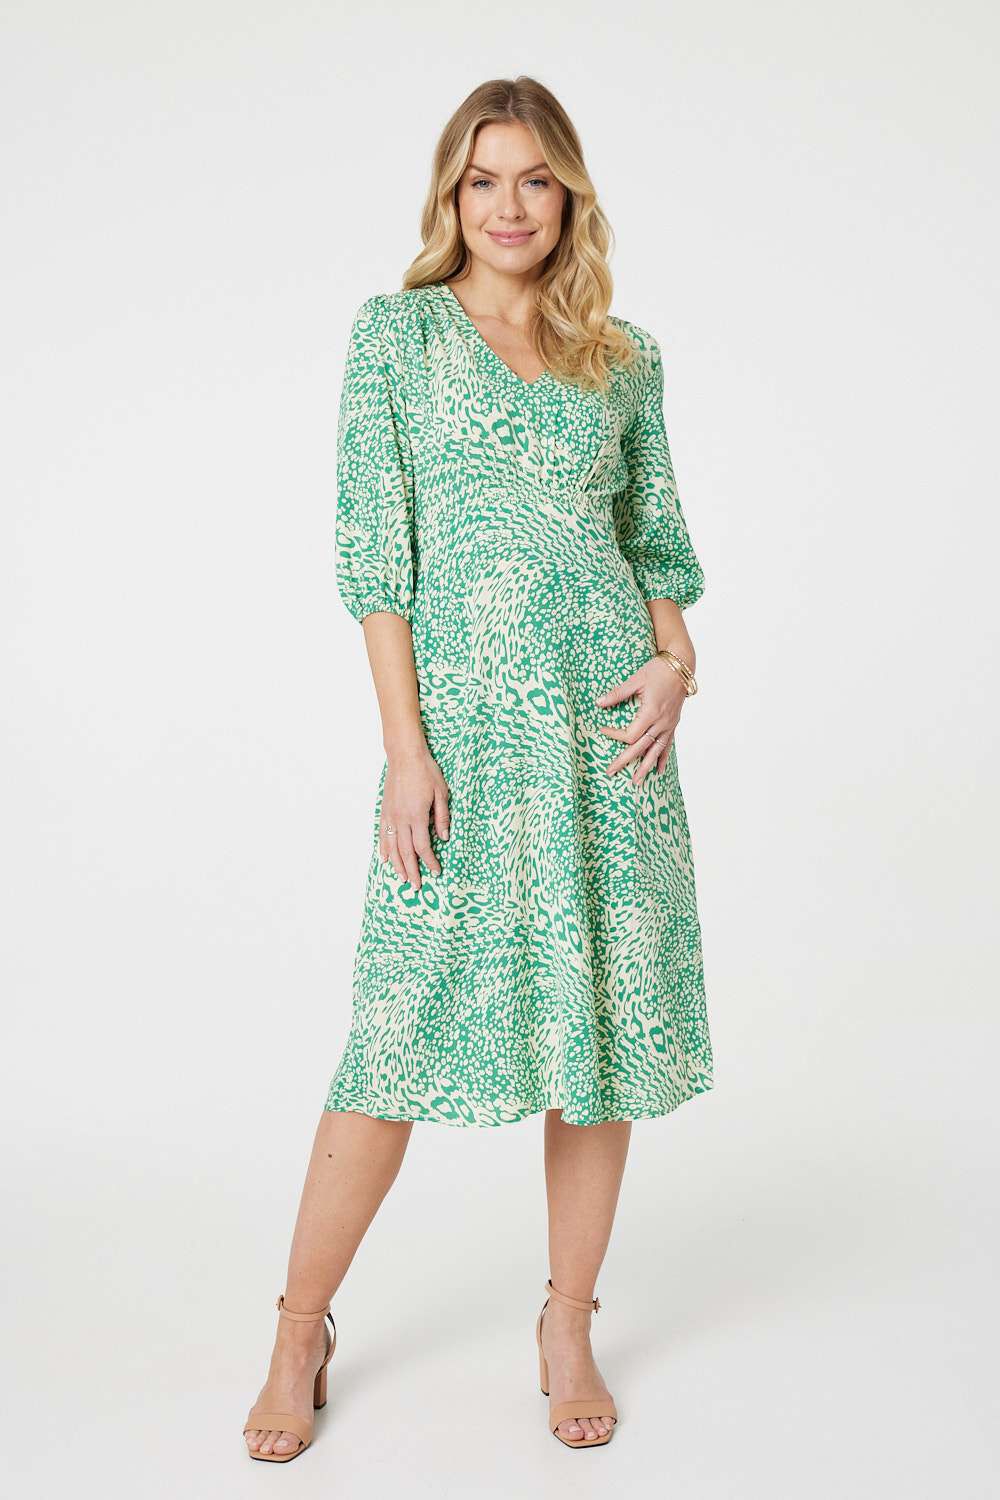 Izabel London Green - Animal Print Slim Fit Midi Dress, Size: 14